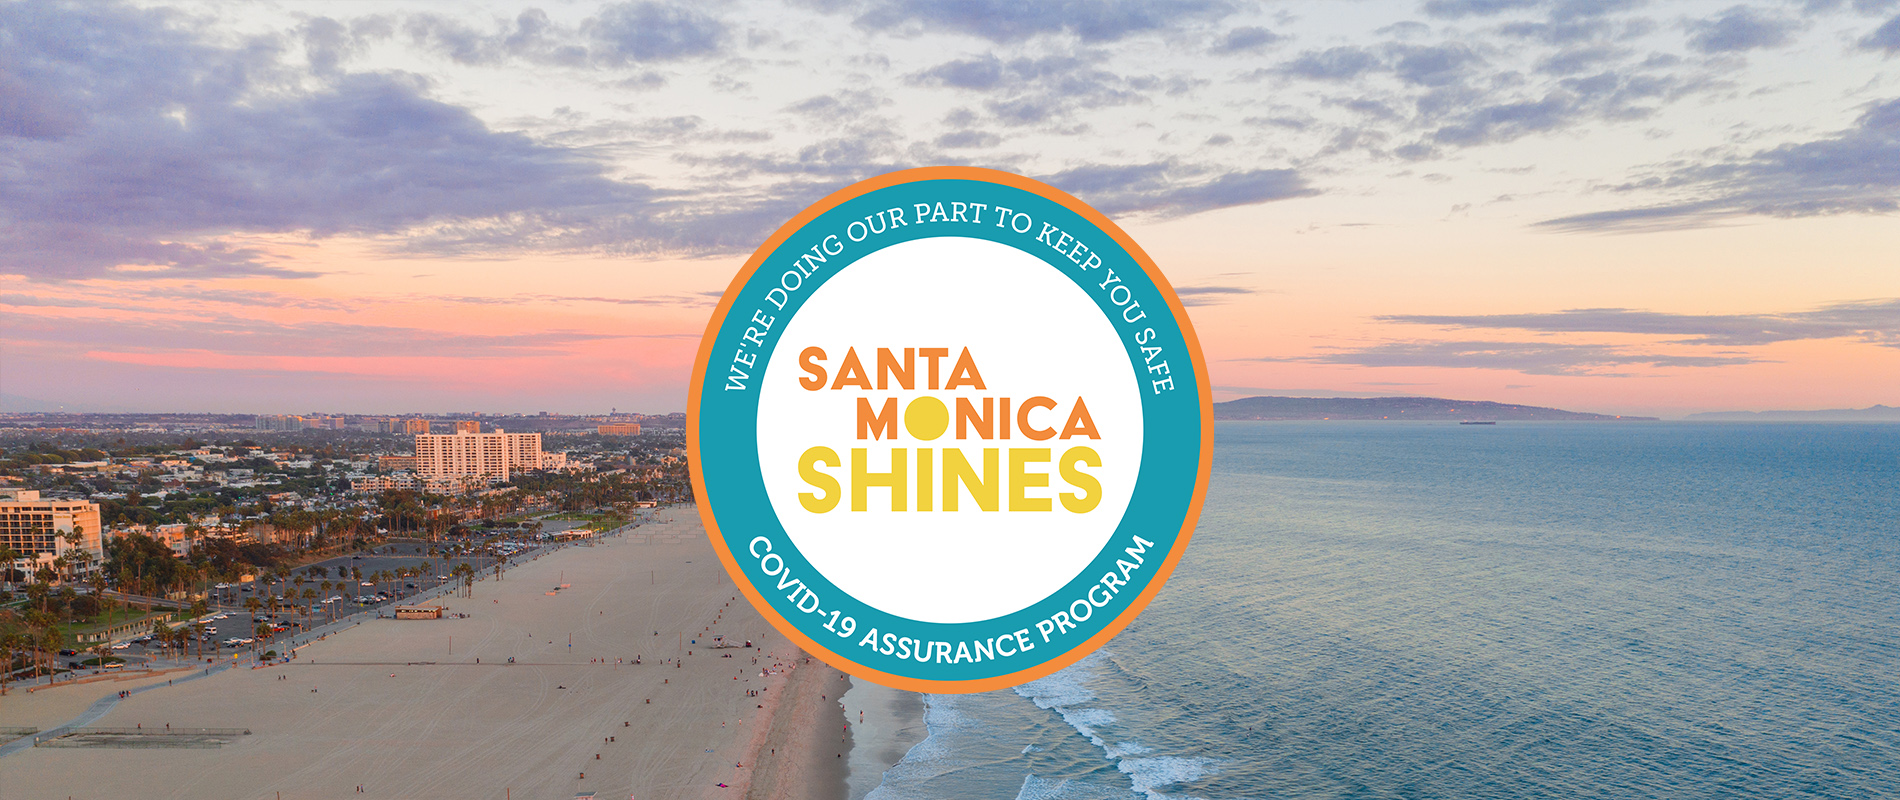 Santa Monica Shines COVID19 Assurance Program Seal